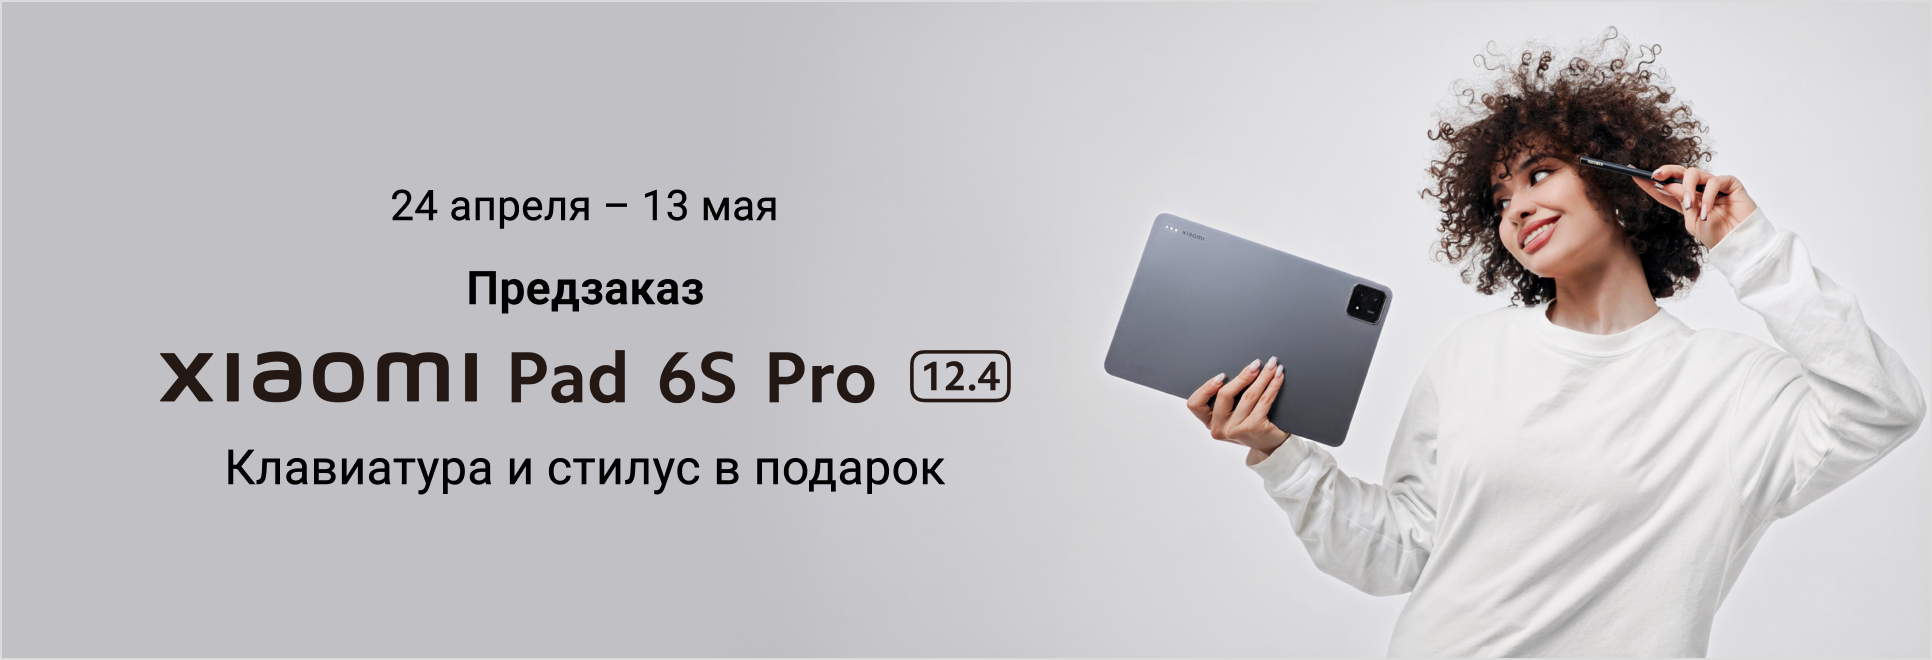 Предзаказ Xiaomi Pad 6S Pro